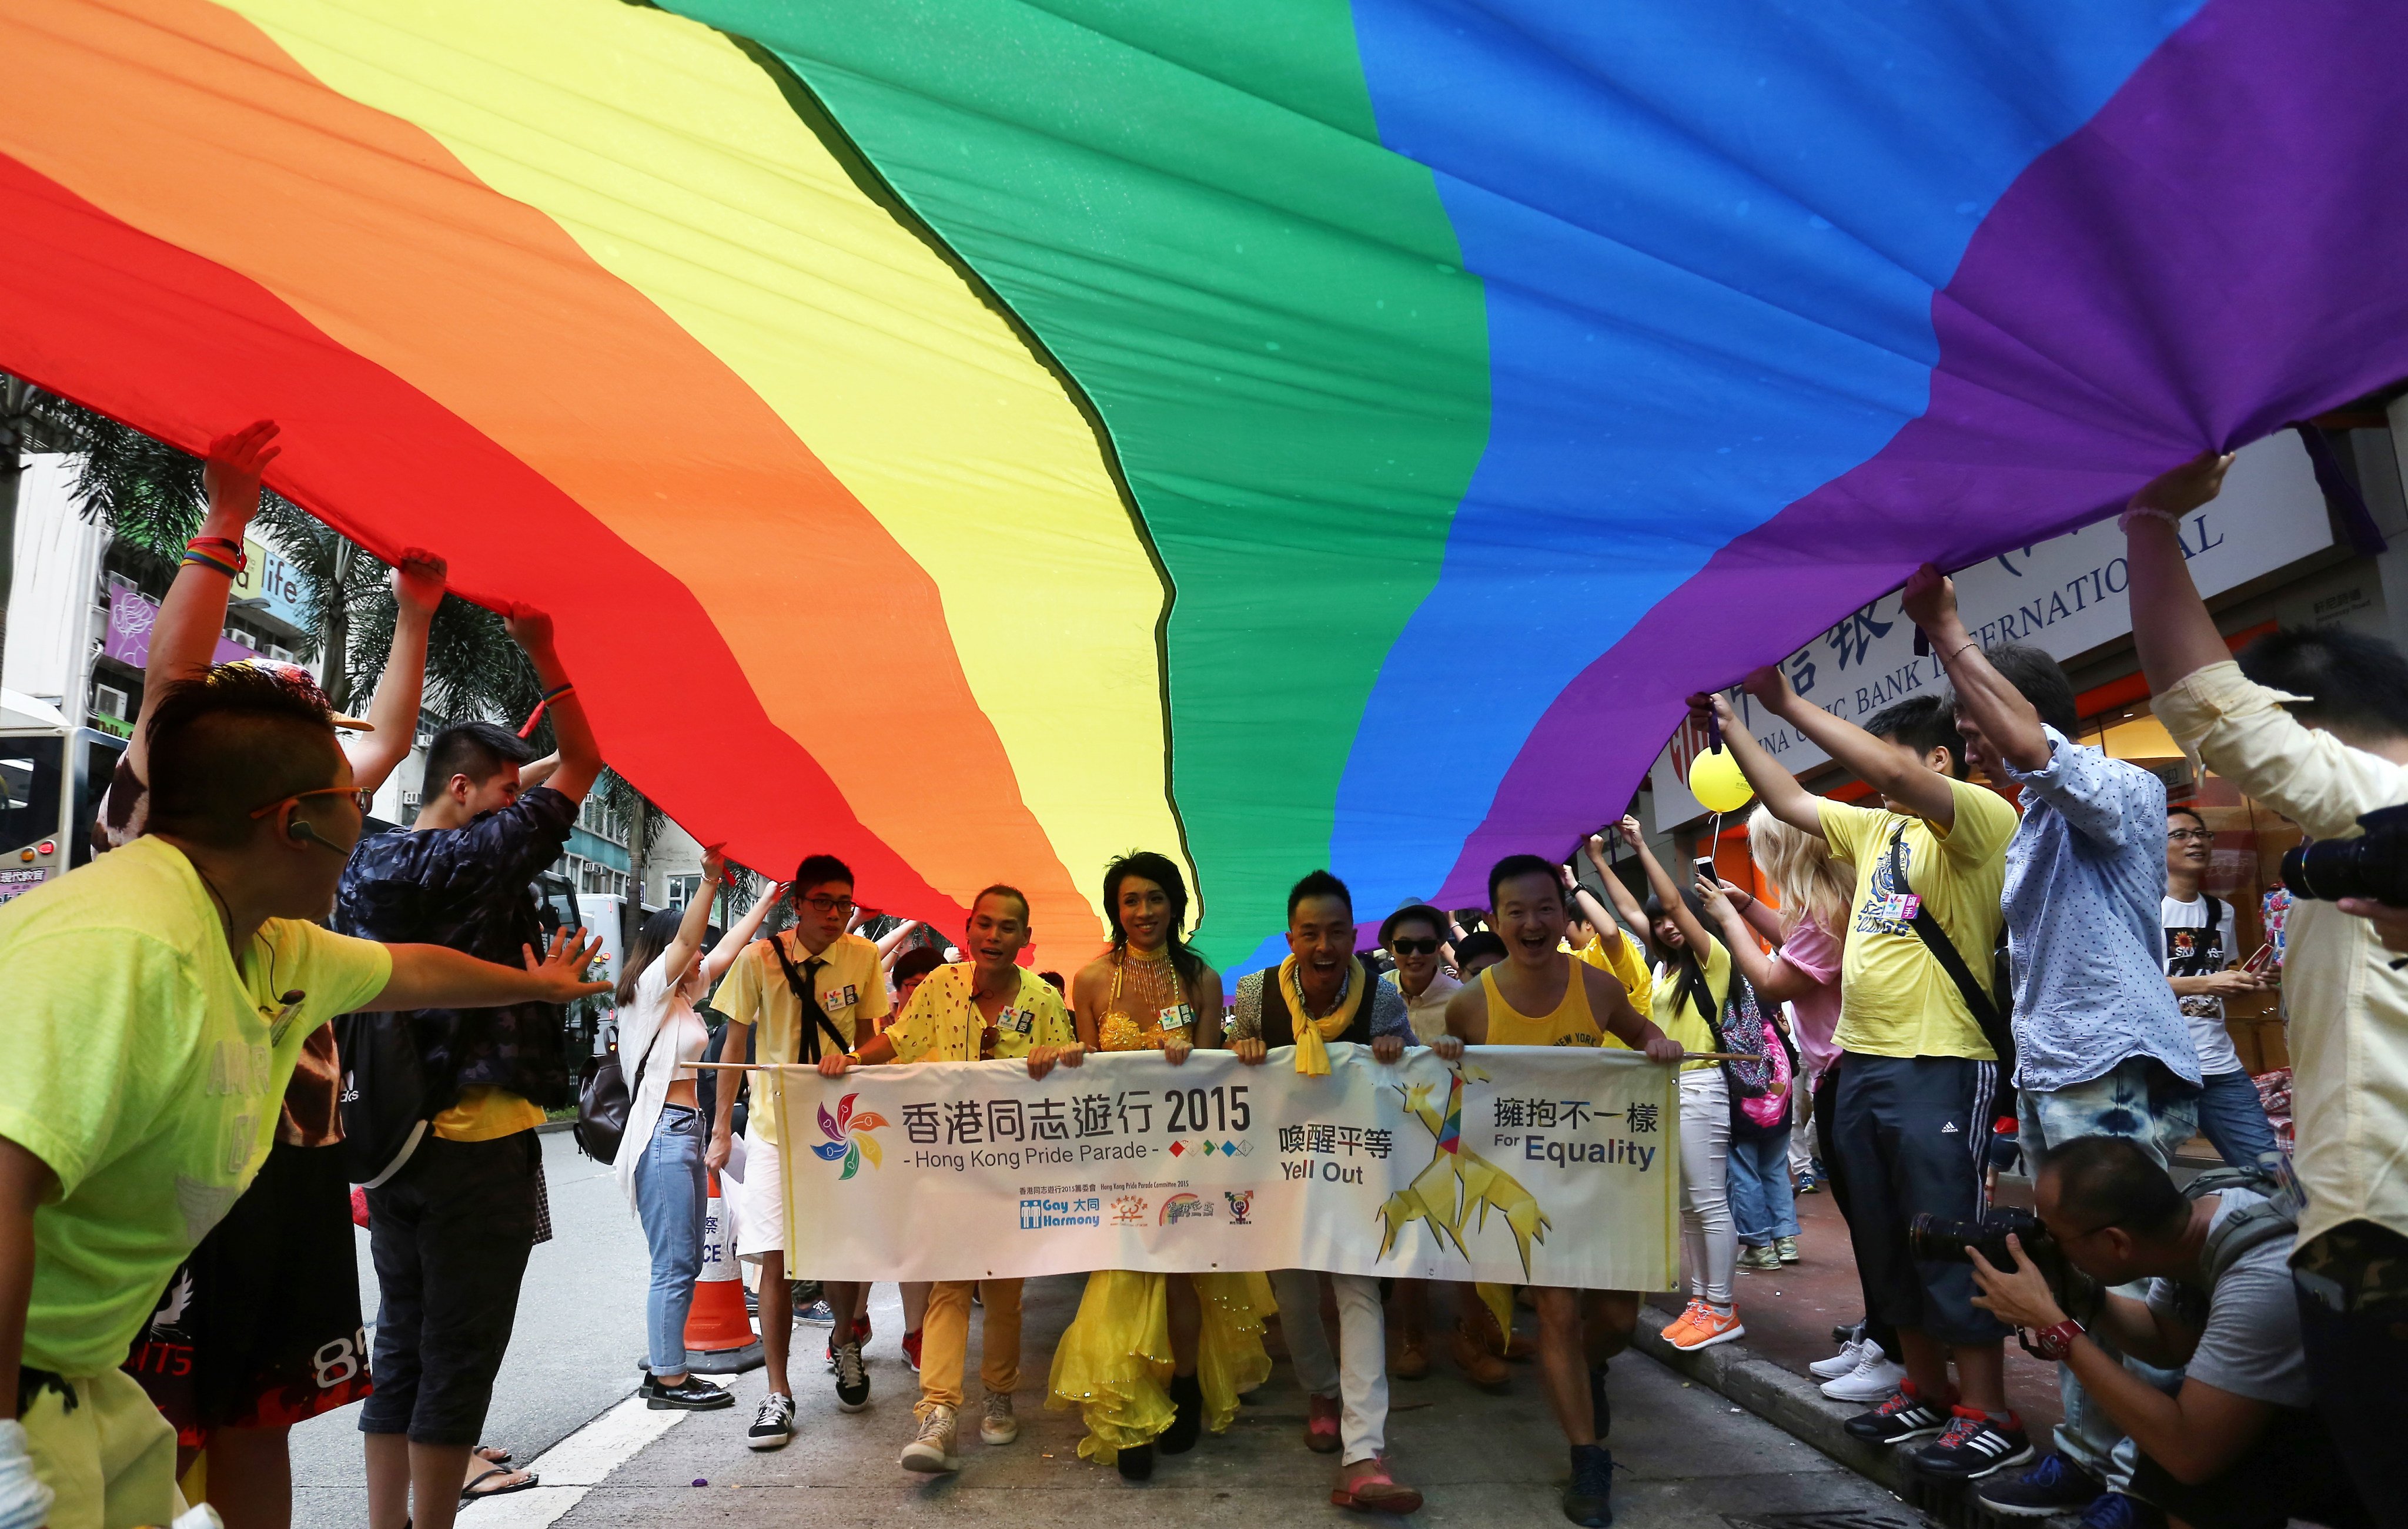 Participants in the 2015 Hong Kong Pride Parade. Attacks on LGBTQ community interests are a sobering reflection of Hong Kong’s dramatic civil society realignment, Post columnist Jason Wordie writes. Photo: Jonathan Wong